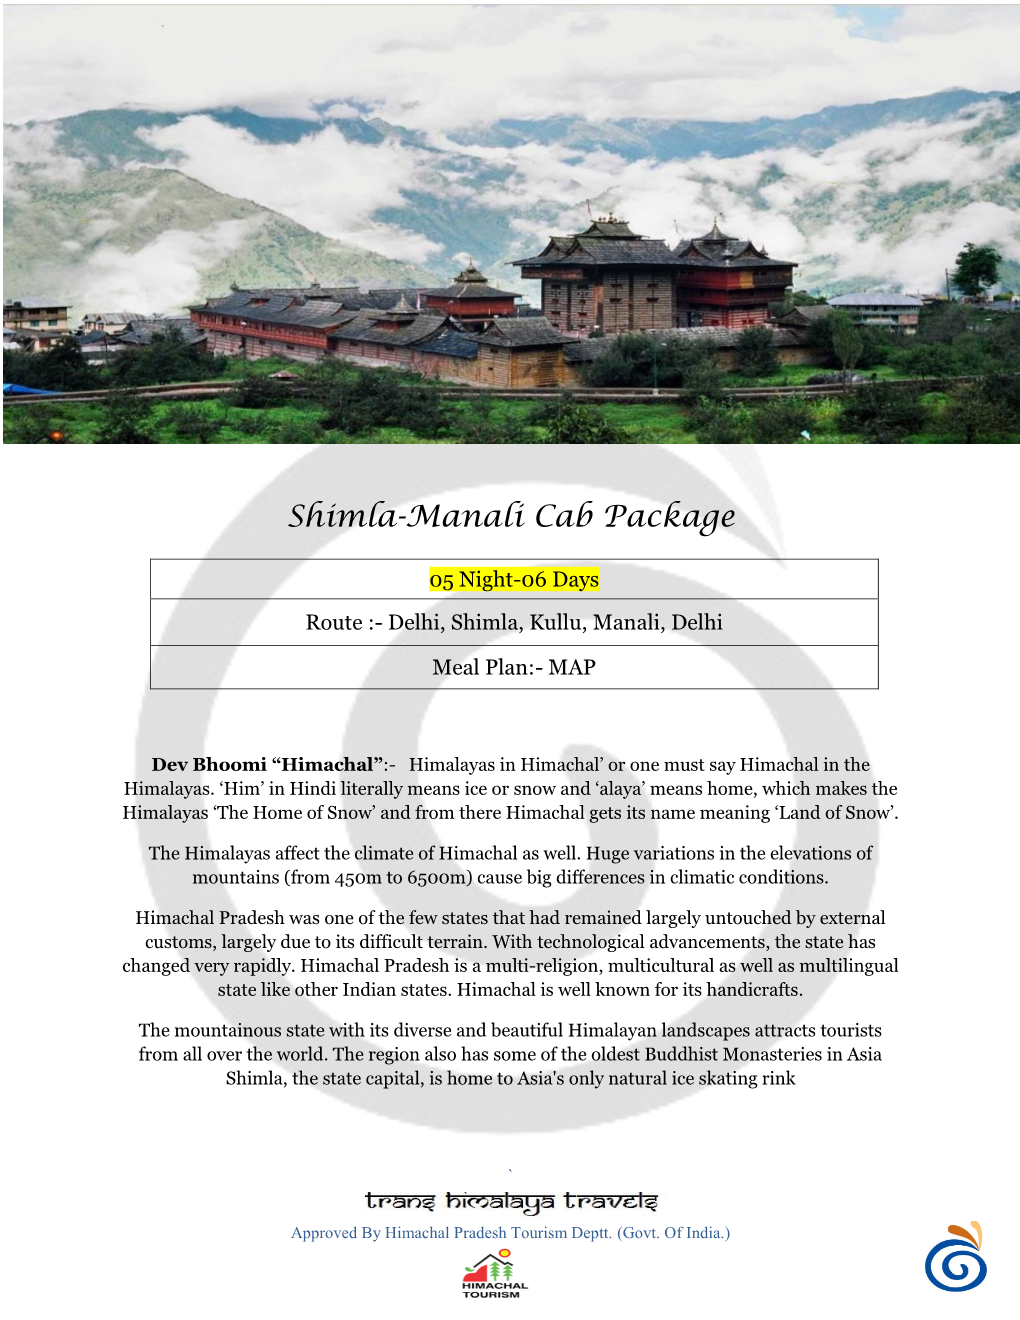 Shimla-Manali Cab Package